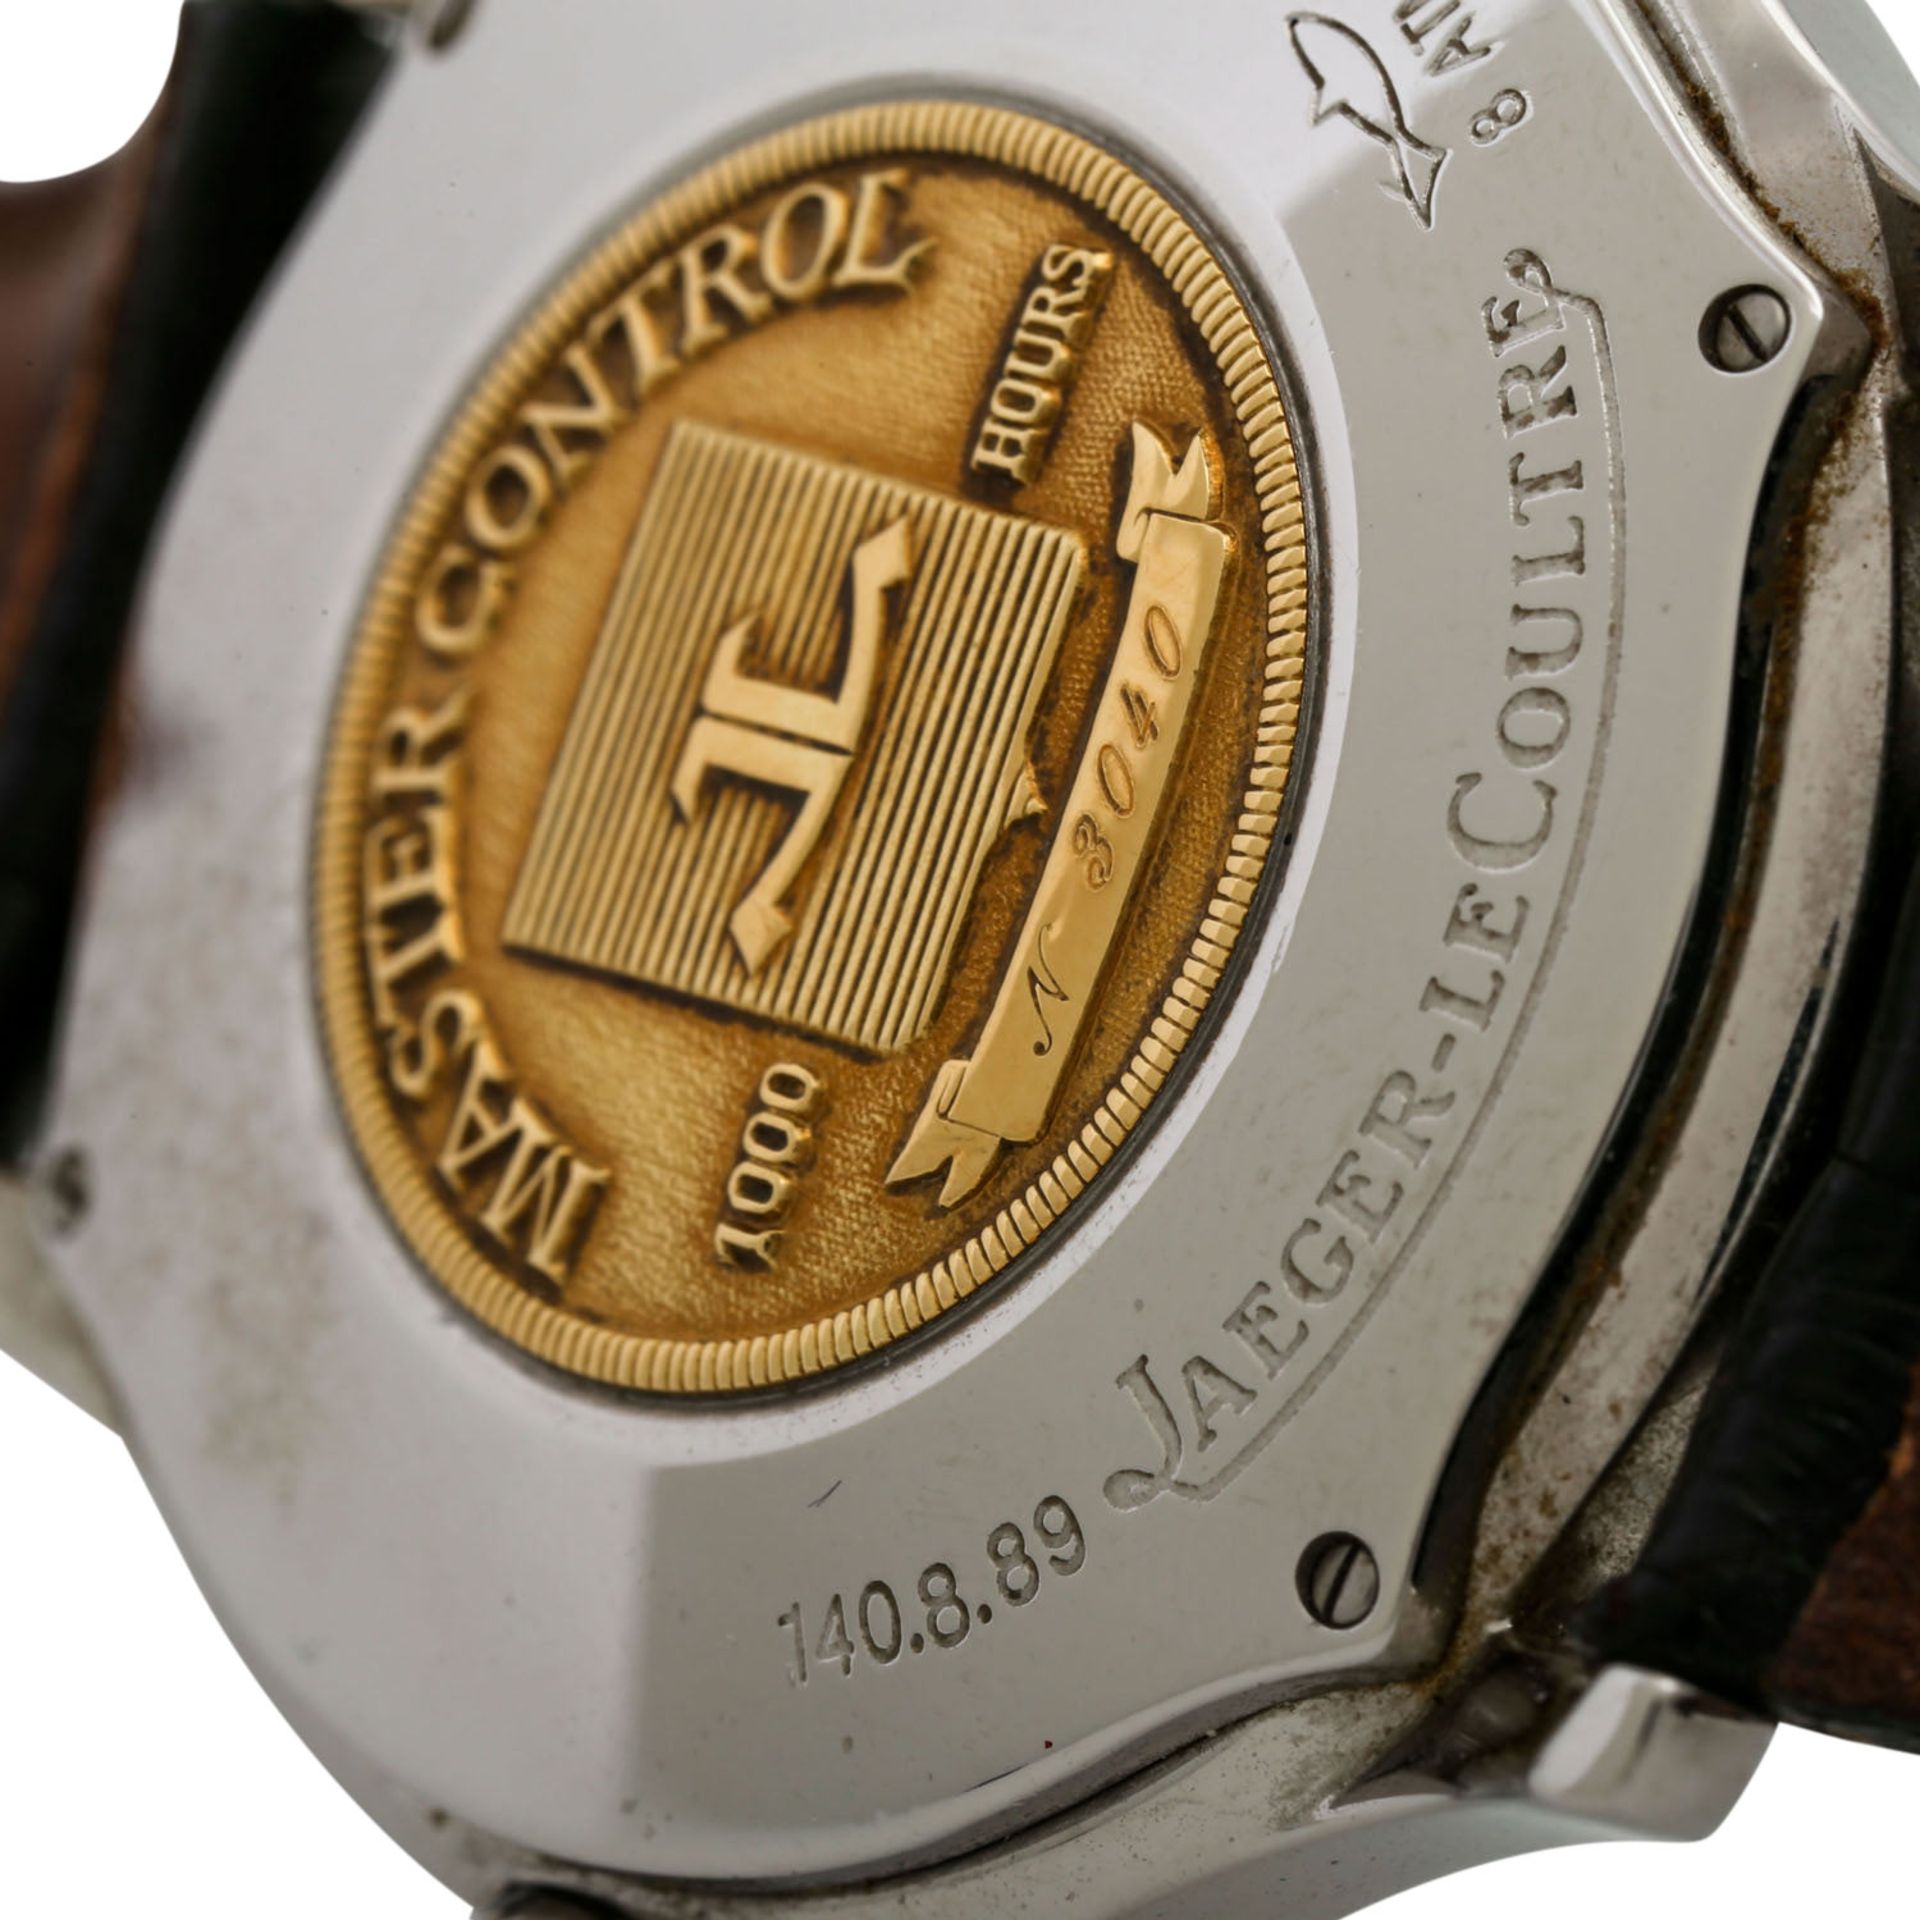 JAEGER LECOULTRE Master Control, Ref. 140.8.89. Armbanduhr.Edelstahl. Automatic-Werk. - Bild 6 aus 7